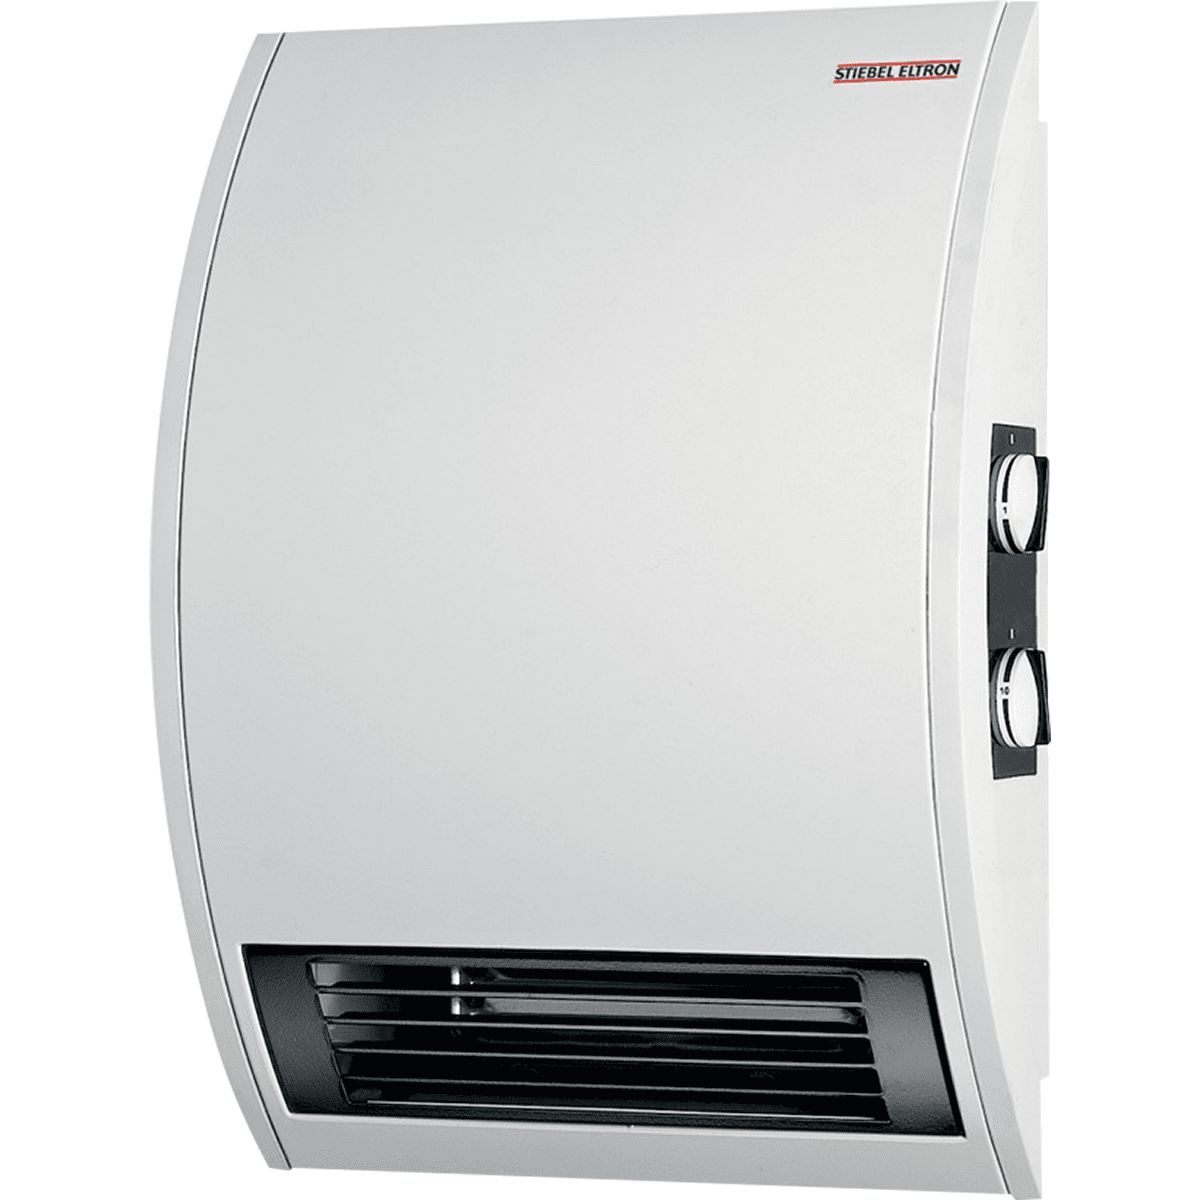 Stiebel Eltron Ckt20e 240v Wall-mounted Heater With Timer